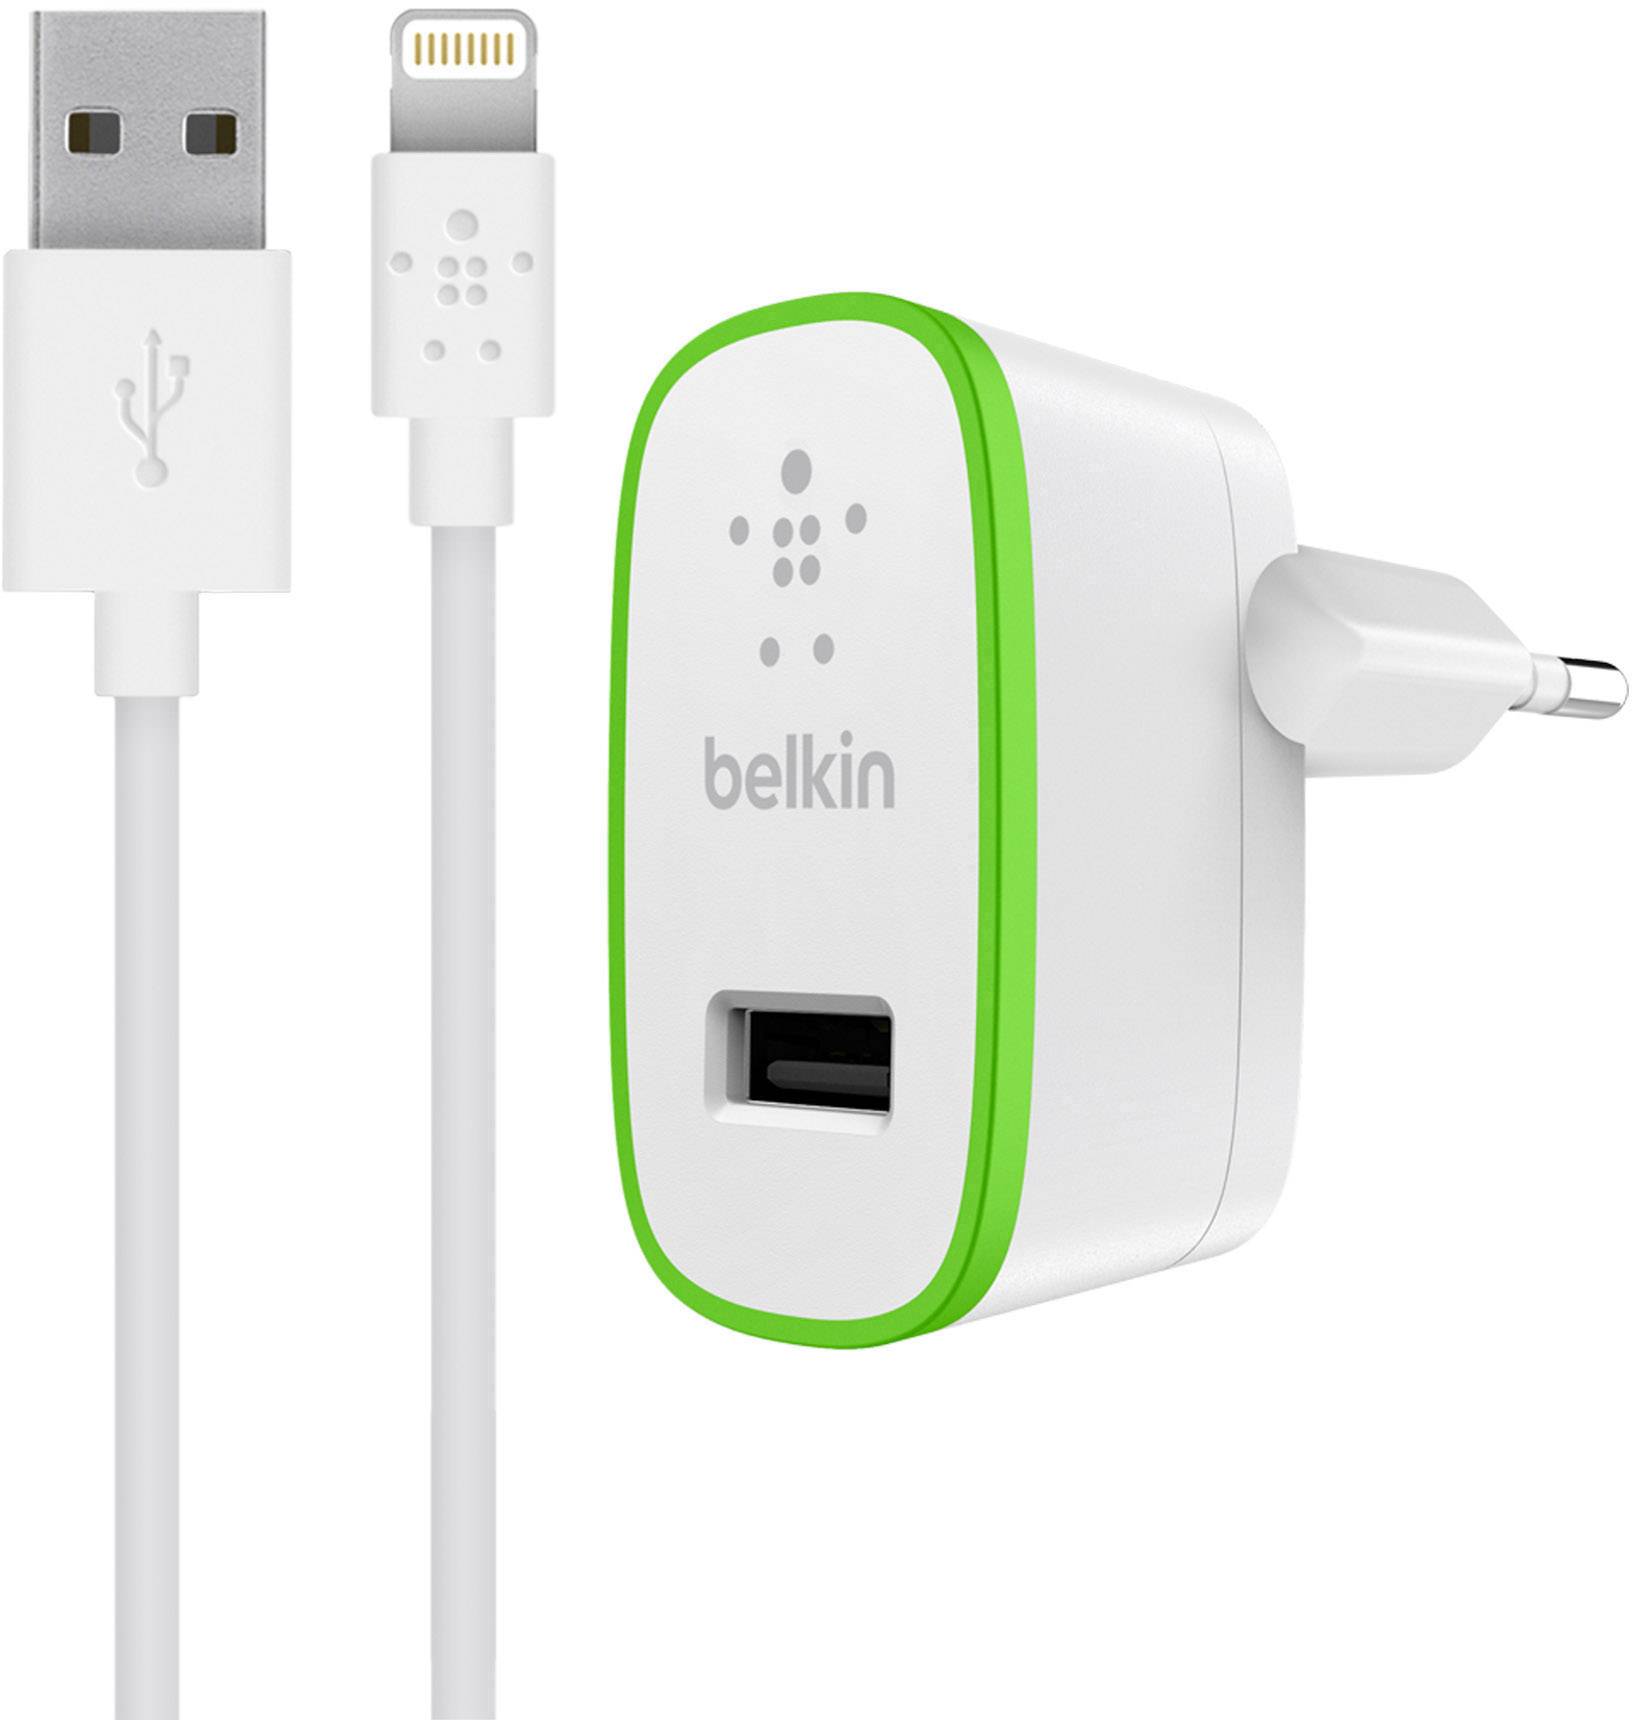 Kruiden Ieder vasthoudend Belkin F8J125vf04-WHT F8J125vf04-WHT iPad/iPhone/iPod charger Mains socket  Max. output current 2400 mA 1 x USB, Apple Do | Conrad.com